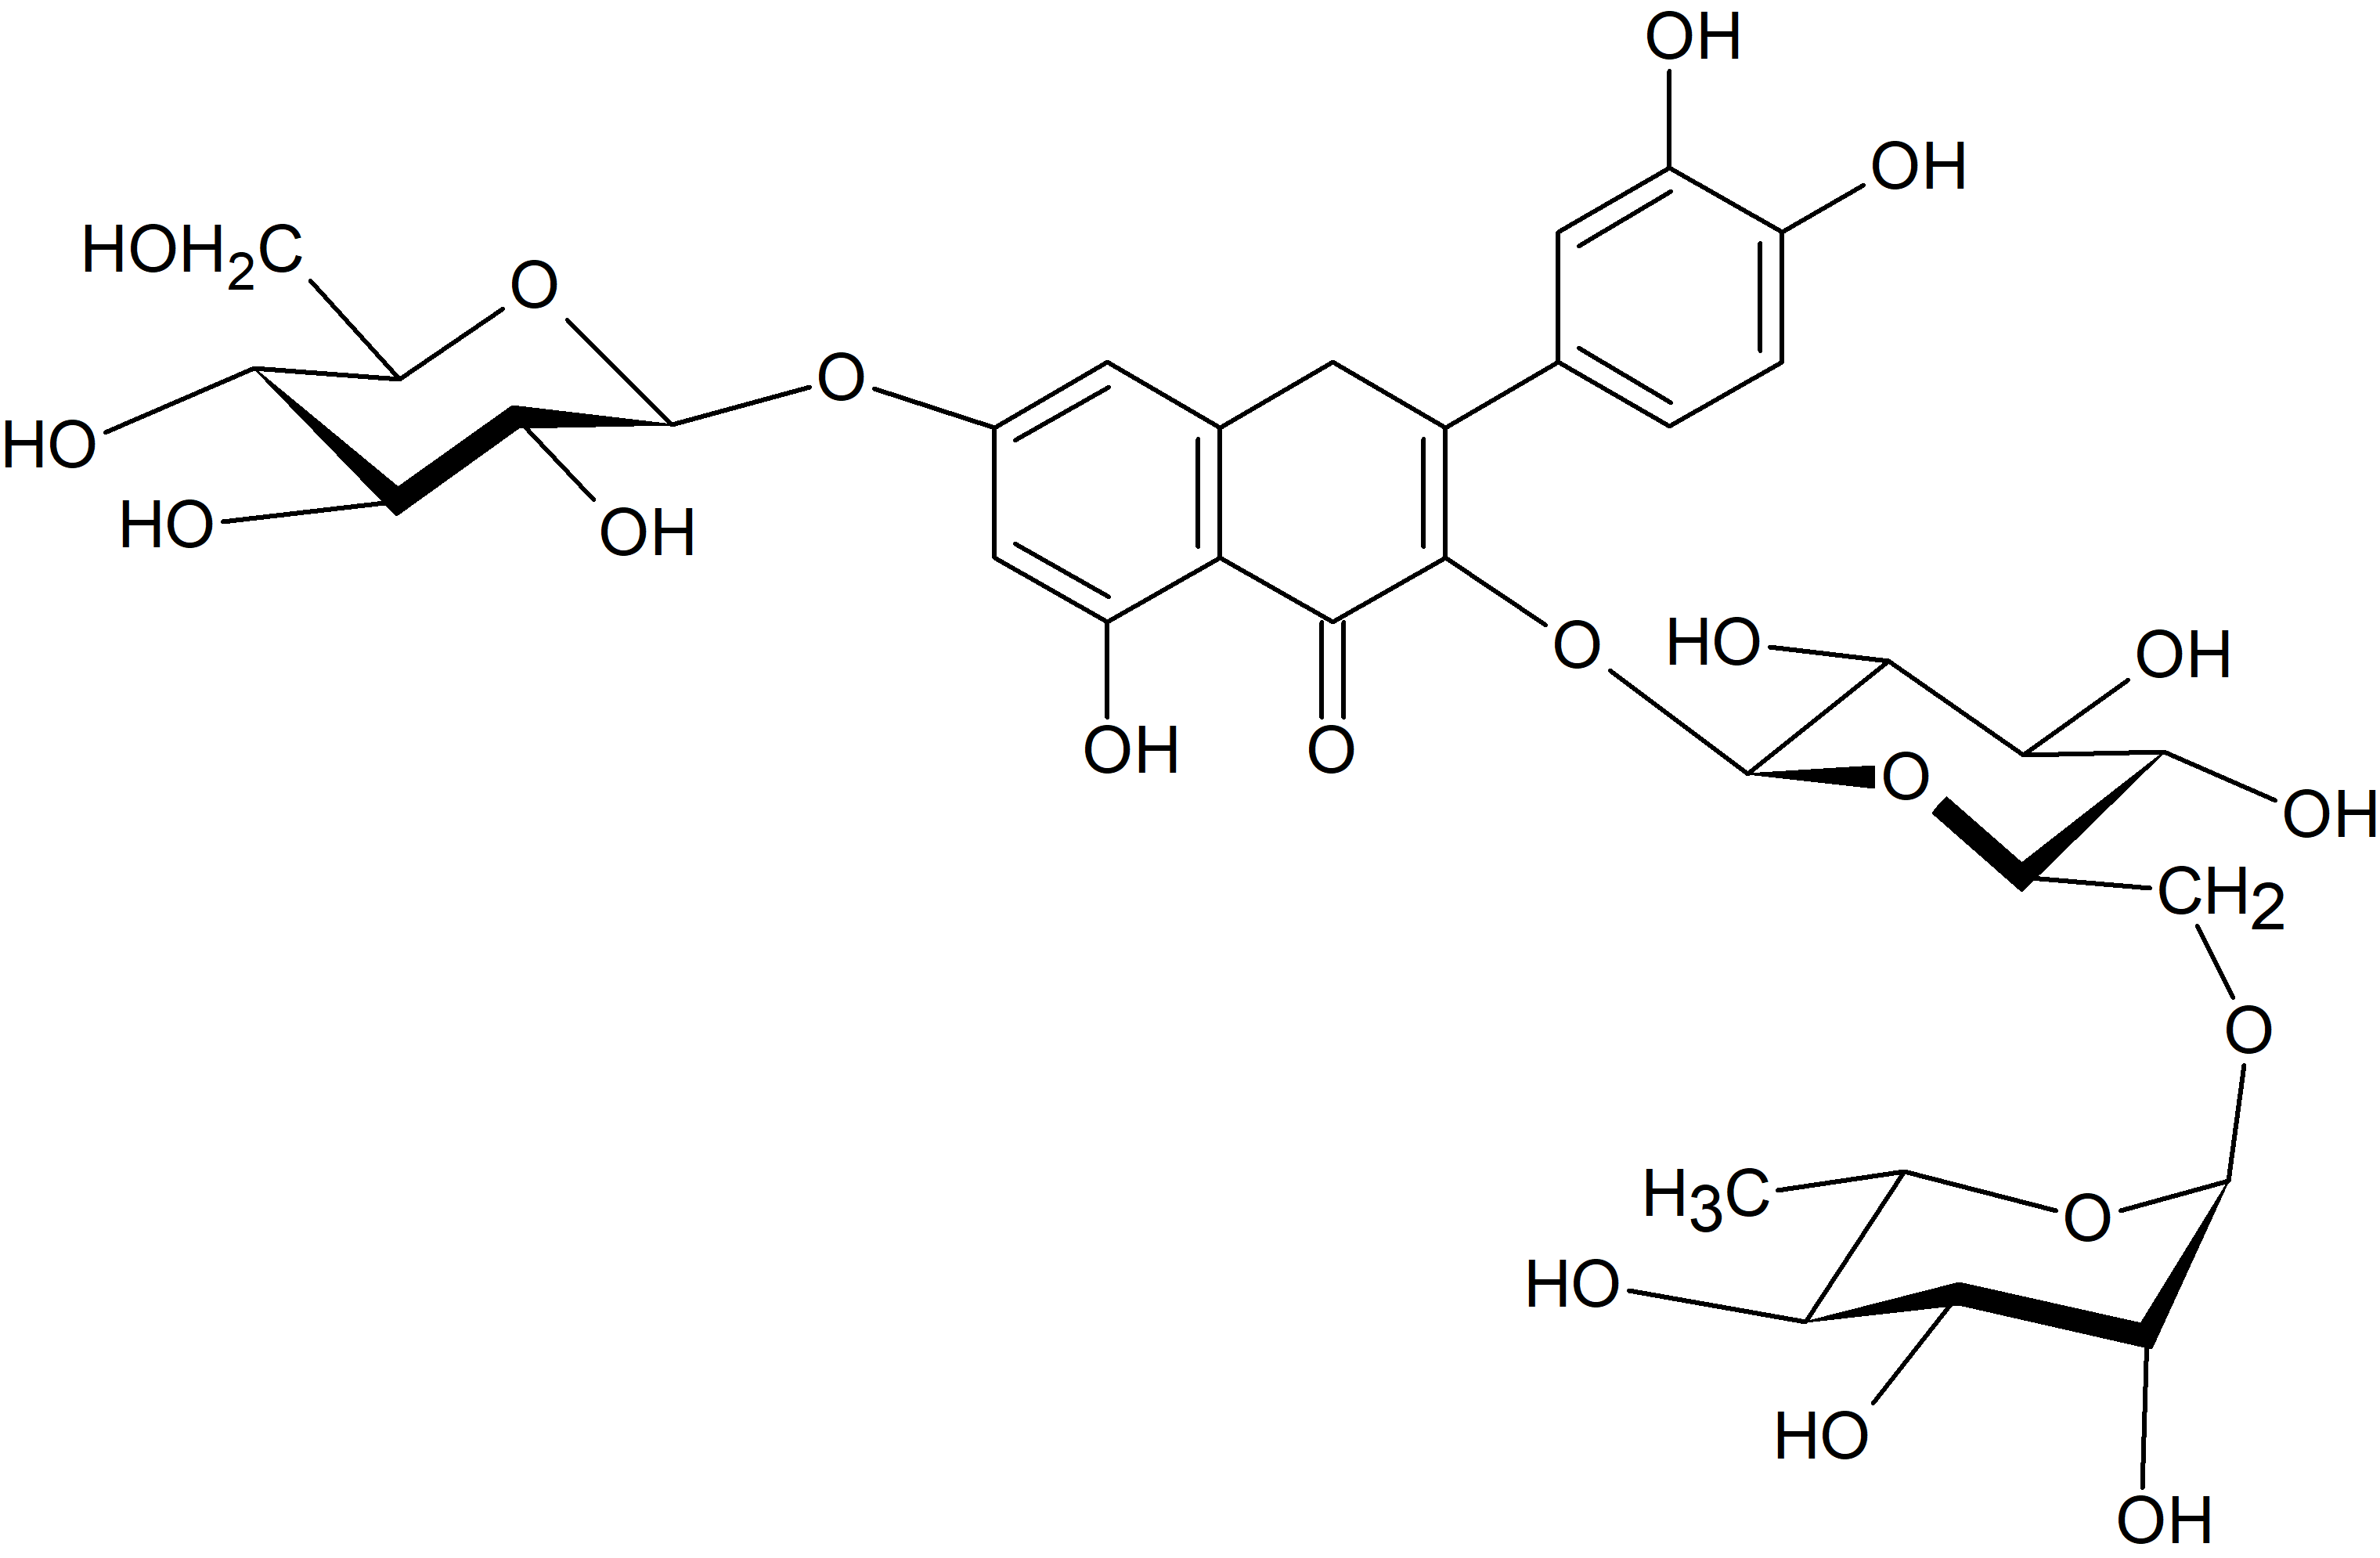 Quercetin 3-O-rutinoside-7-0-glucoside